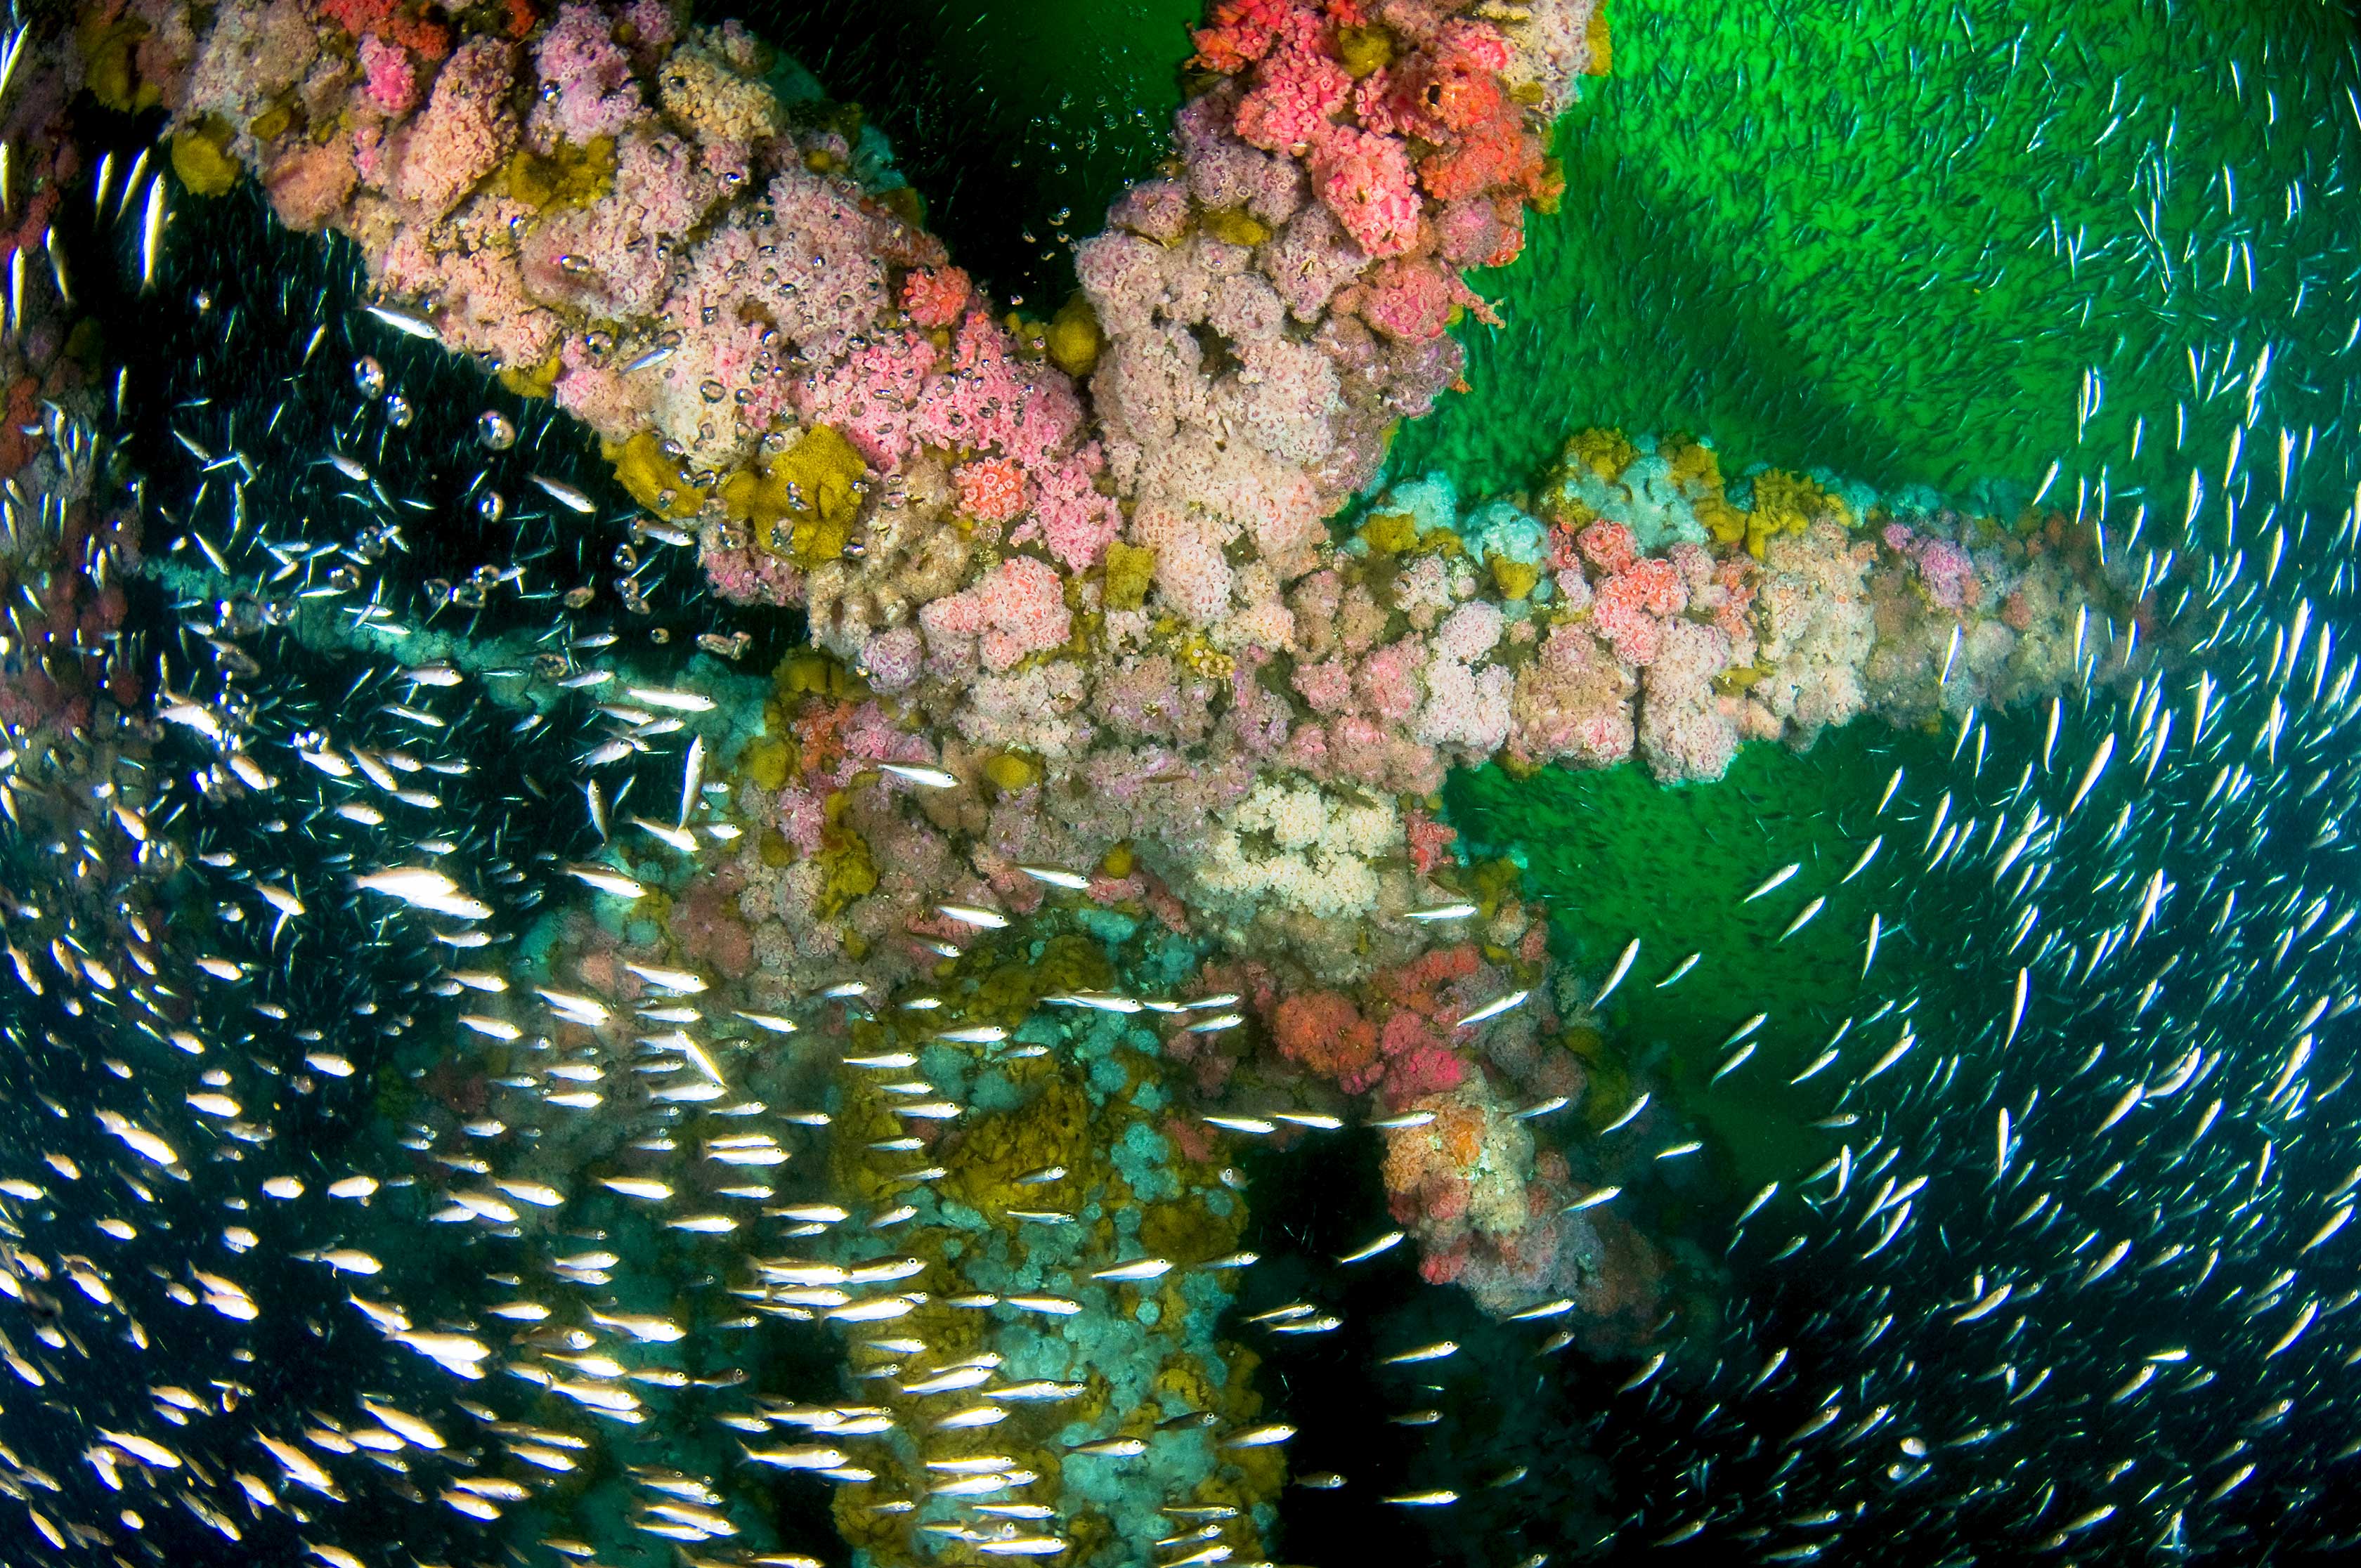 School of Bocaccio rockfish swims around Platform Gilda